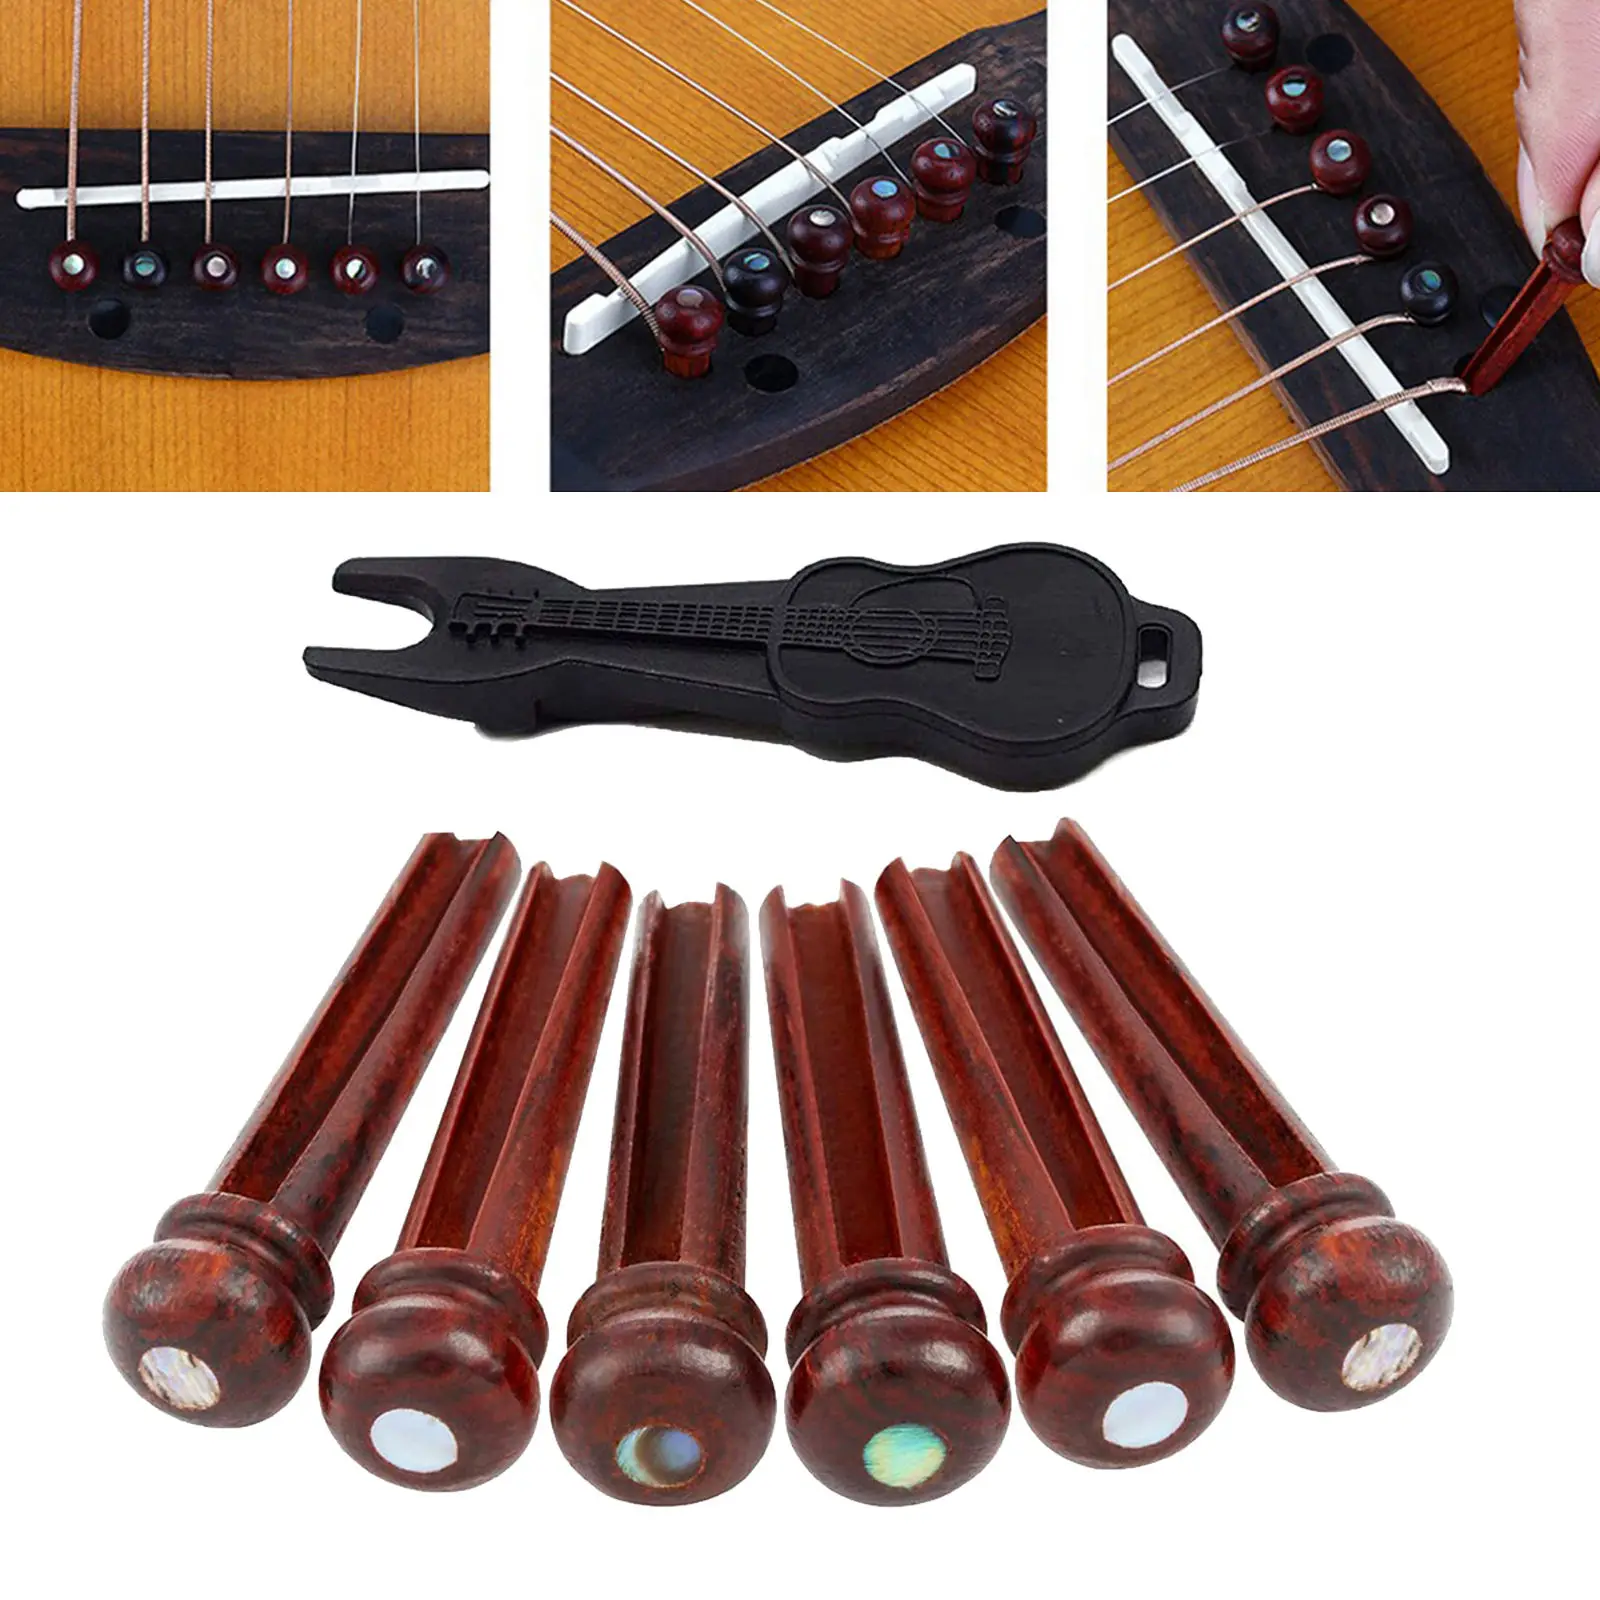 

6pcs Guitar Bridge Pins Folk Guitars Repair Pegs Maintenance Pin Puller Remover Extractor Acoustic Classical Guitar Parts